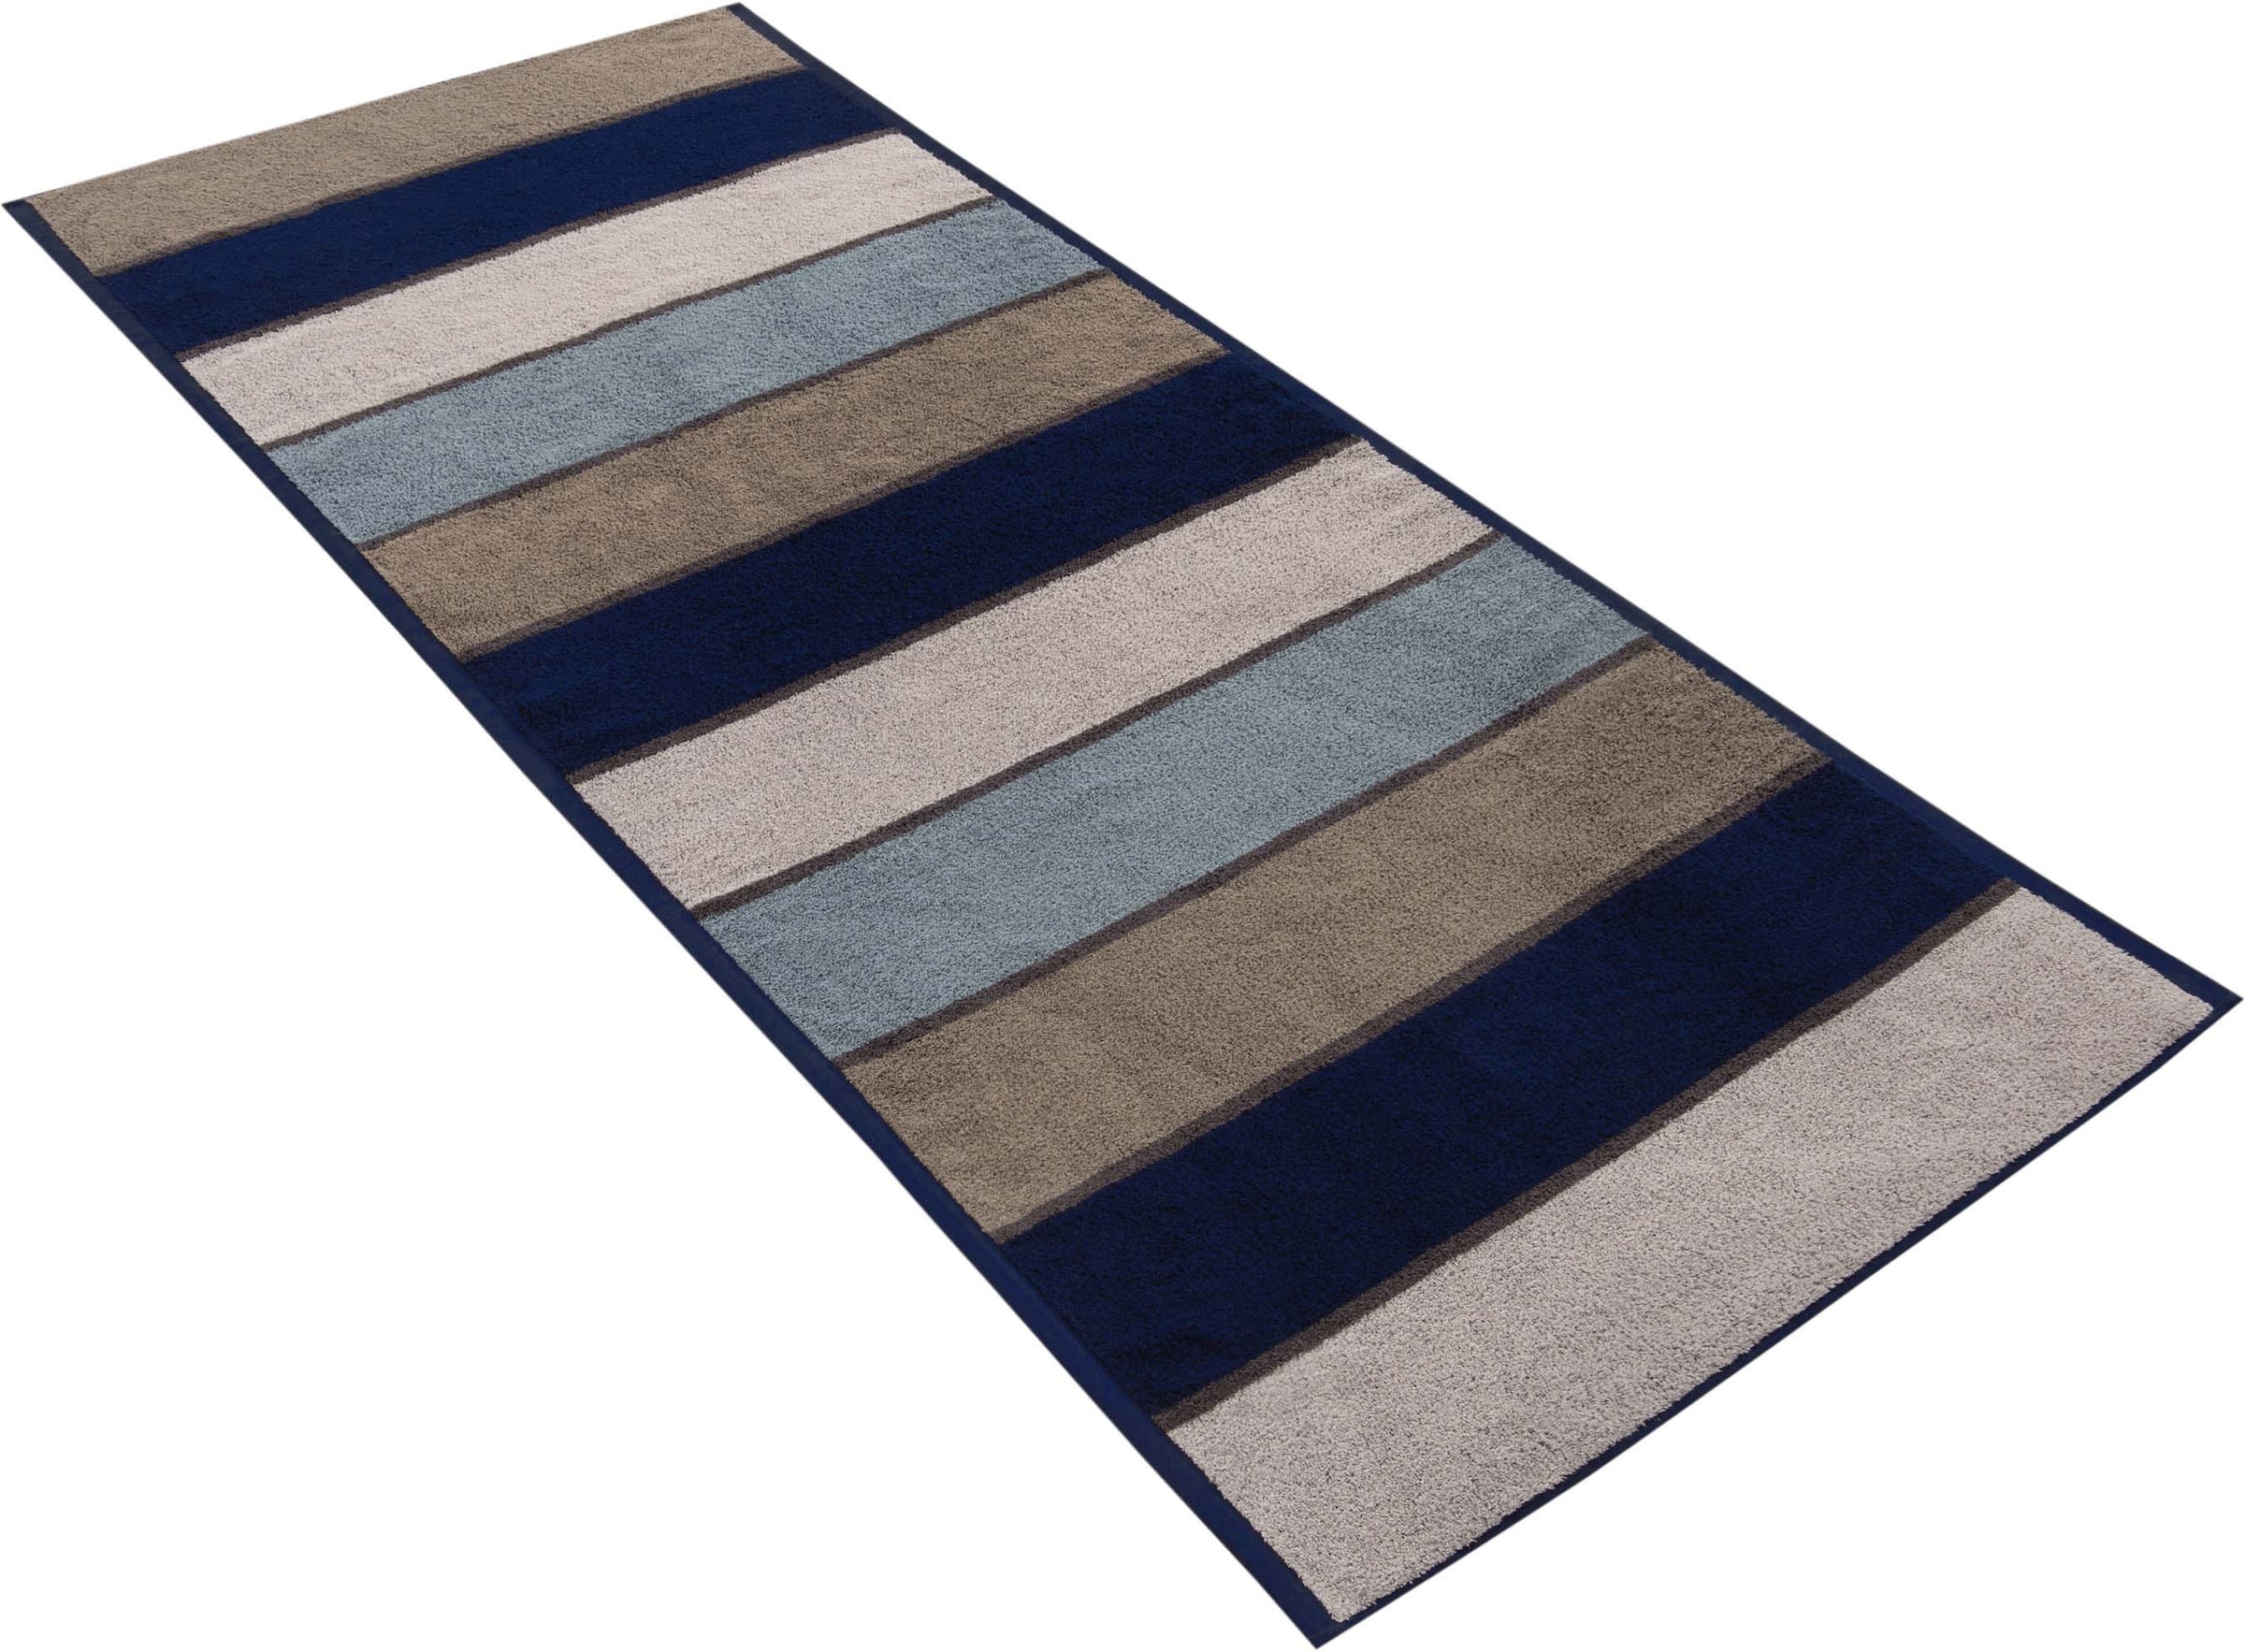 Sauna Textilien Blau | Moebel 24 in Preisvergleich